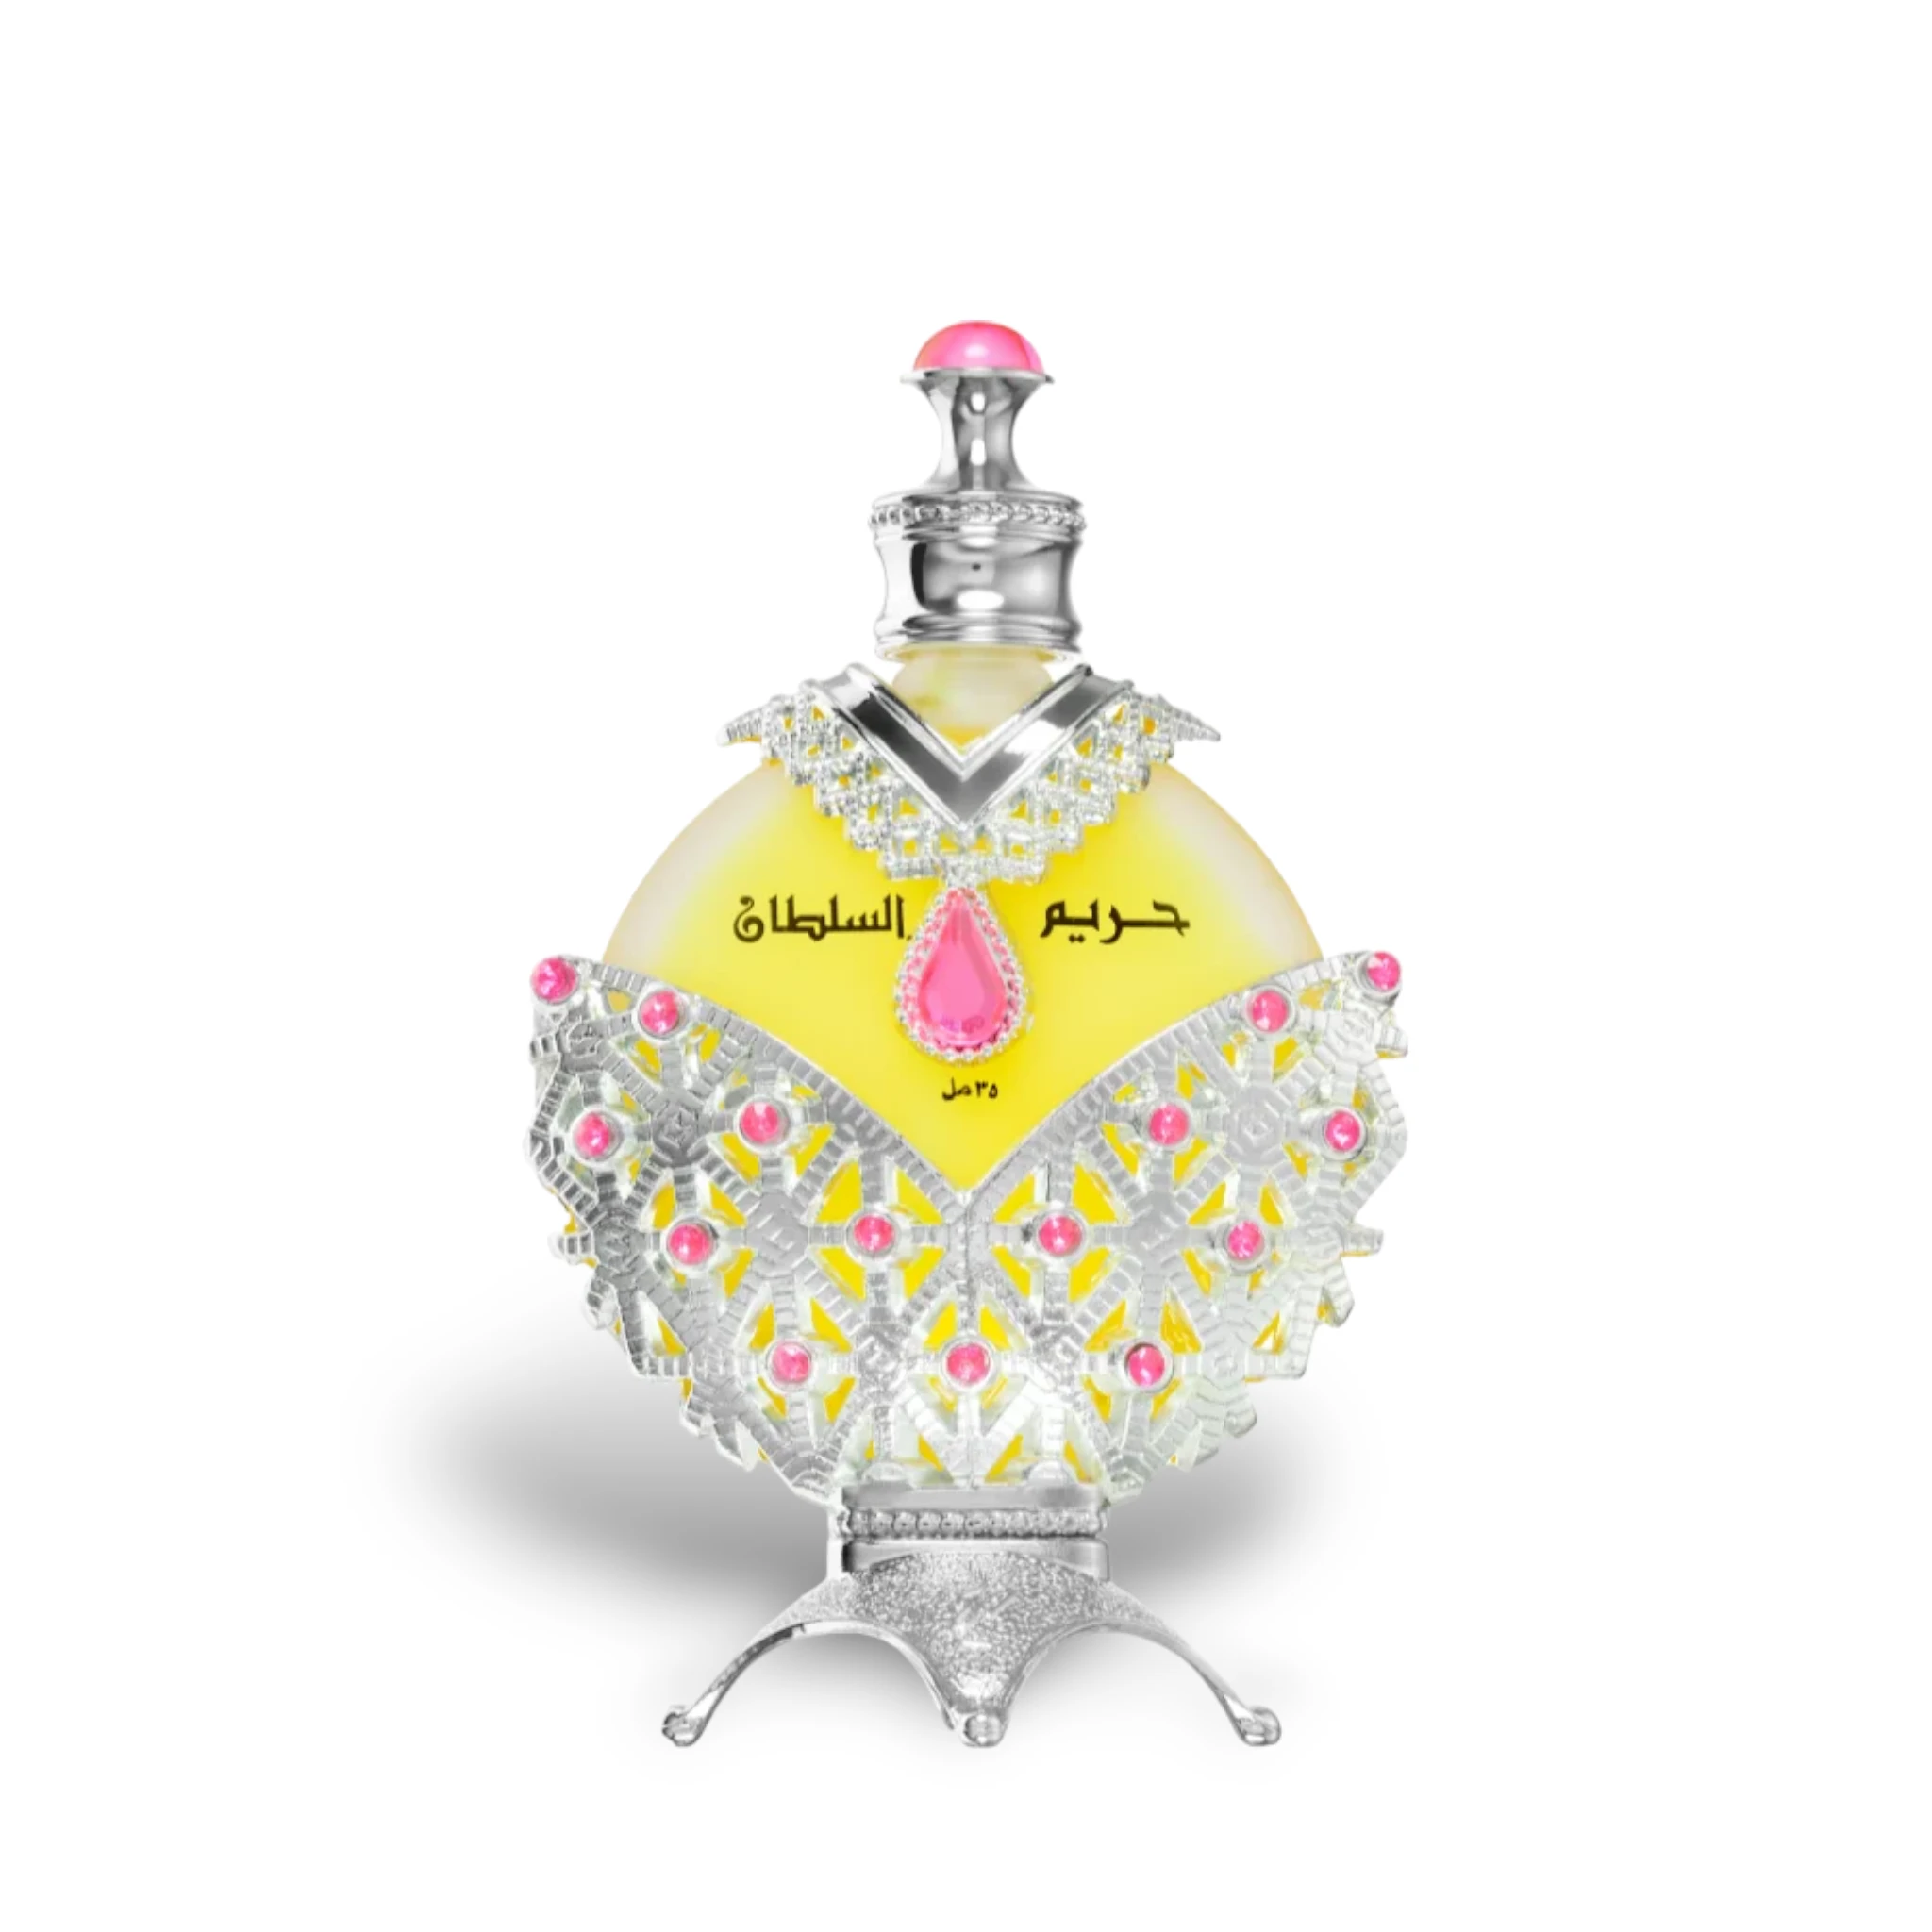 Hareem Al Sultan Silver Concentrated Perfume Oil Attar 35Ml By Khadlaj